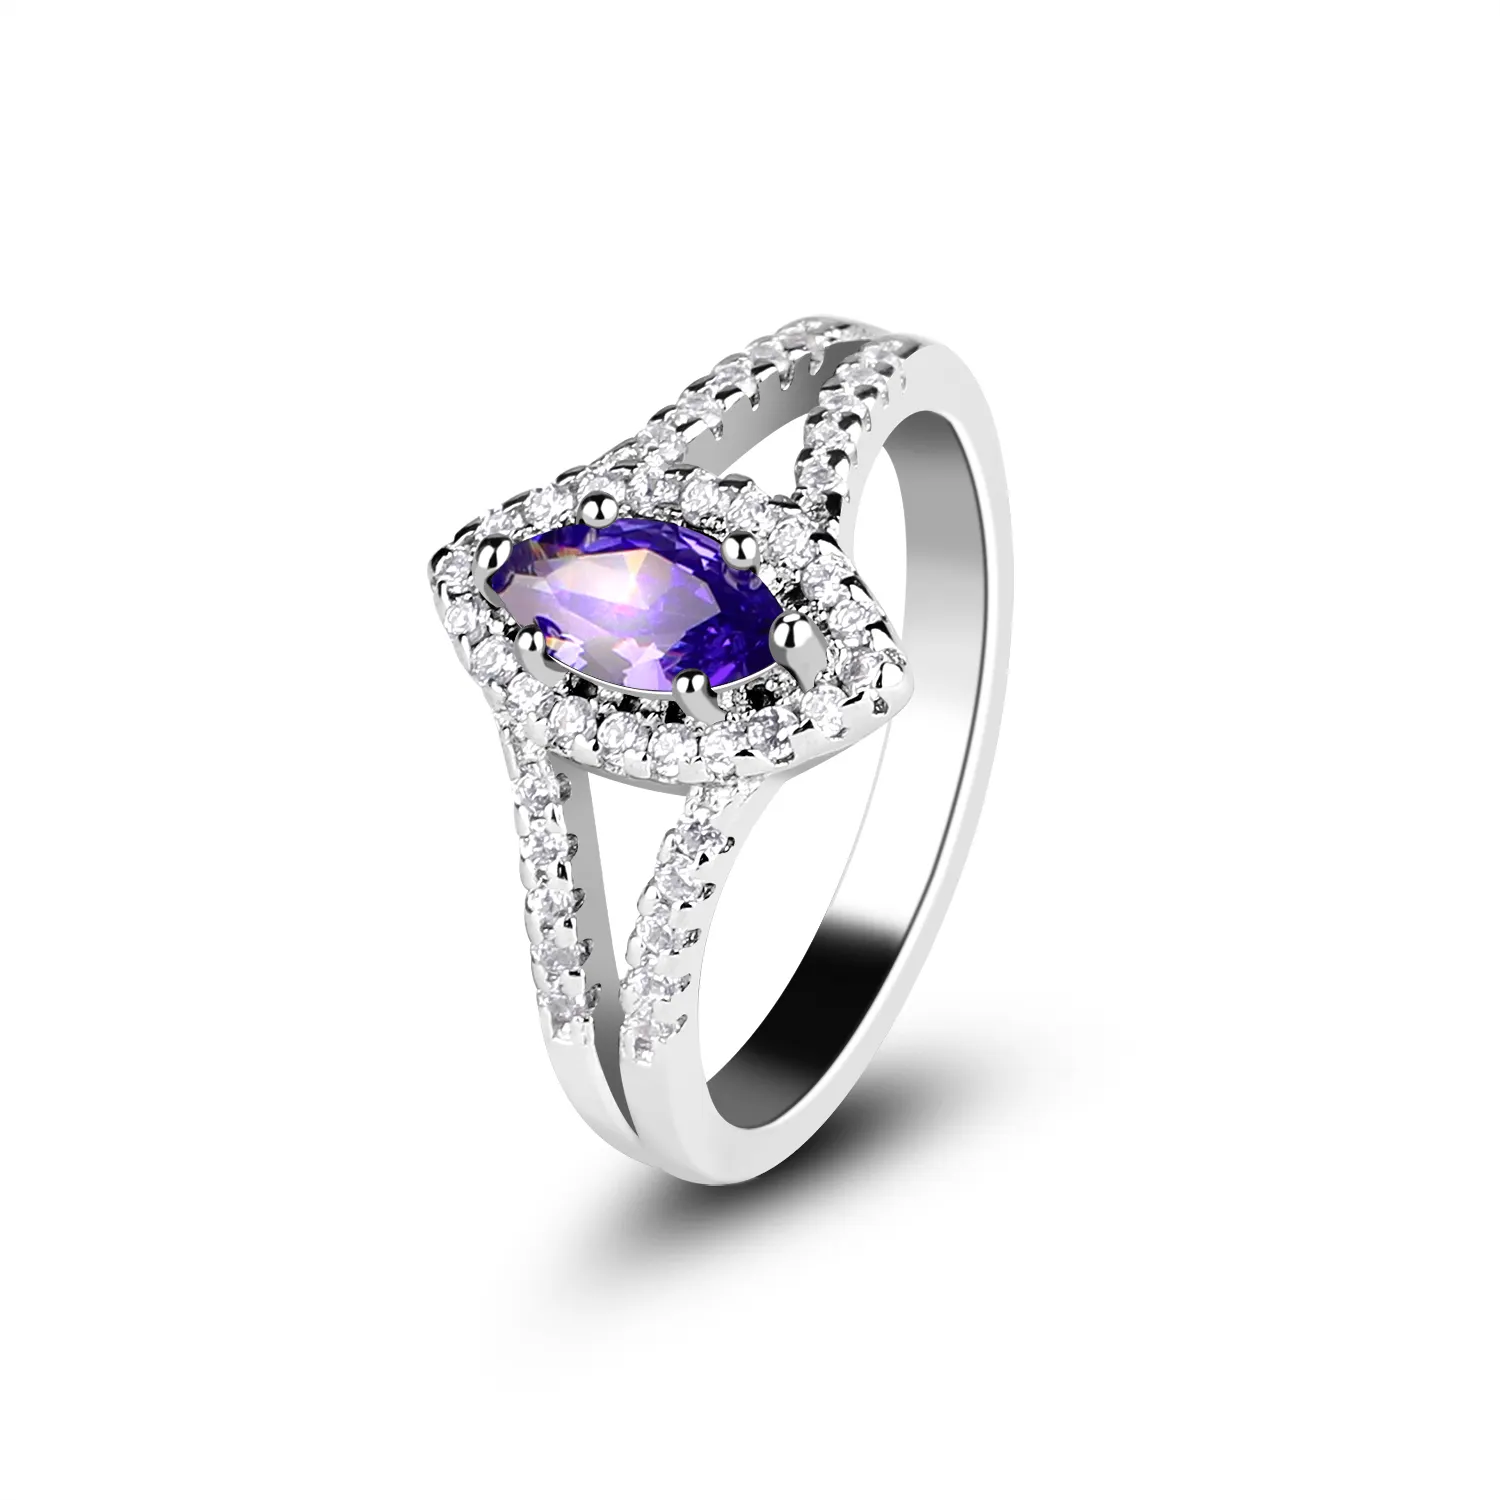 Mascot Custom Design Sterling Silver 925 Jewelry Gemstone Jewelry Ring Semi Precious Stones Silver Women Ring